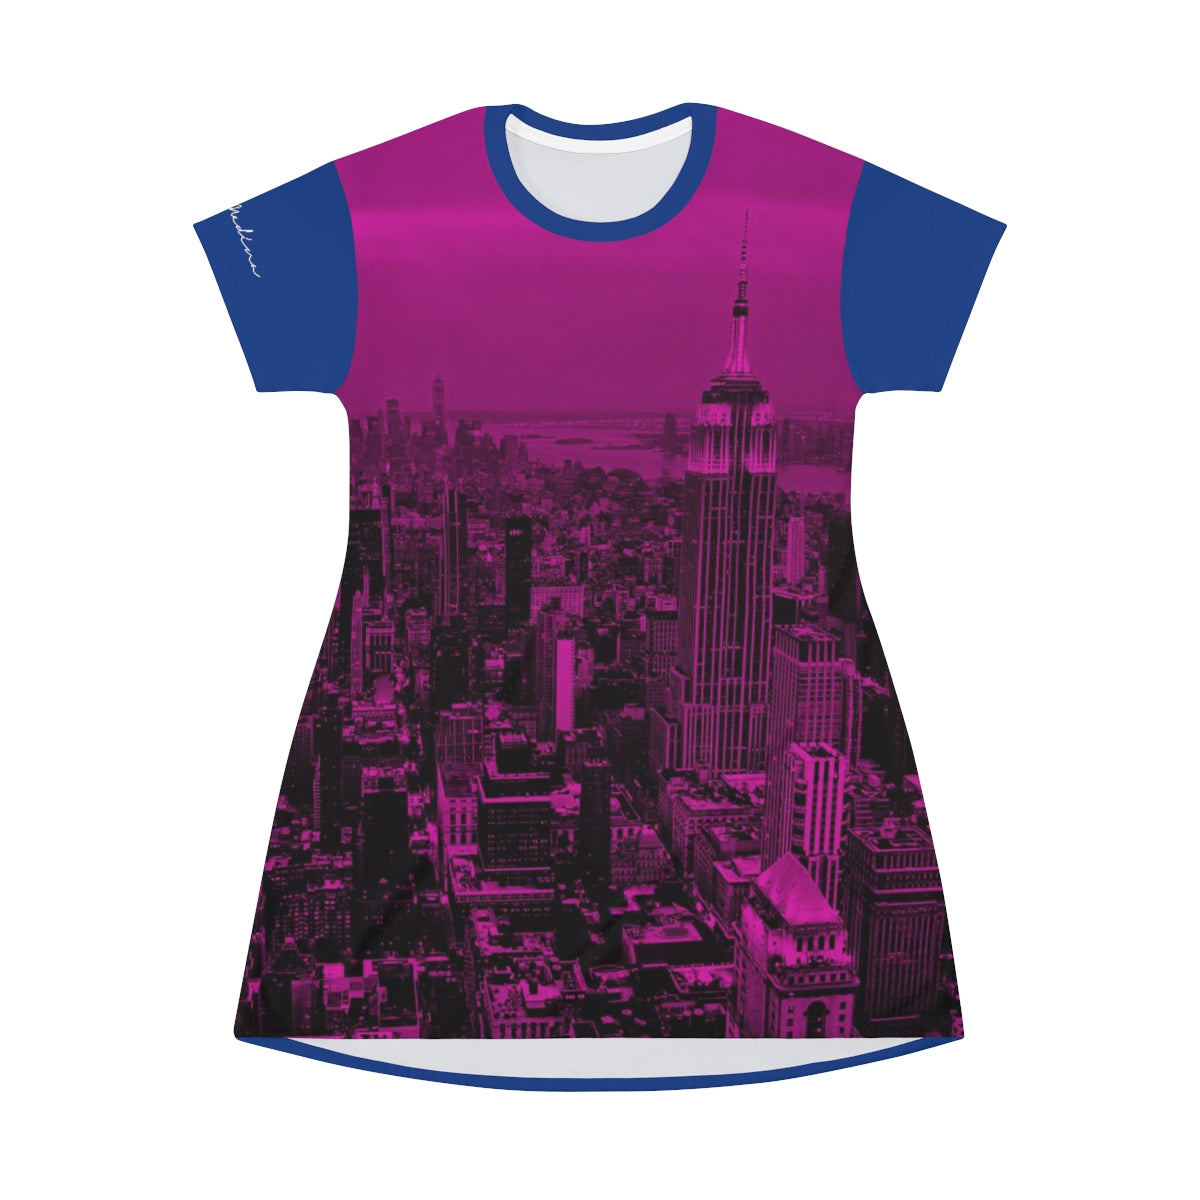 Shirtdress, Blue-Pink NYC View